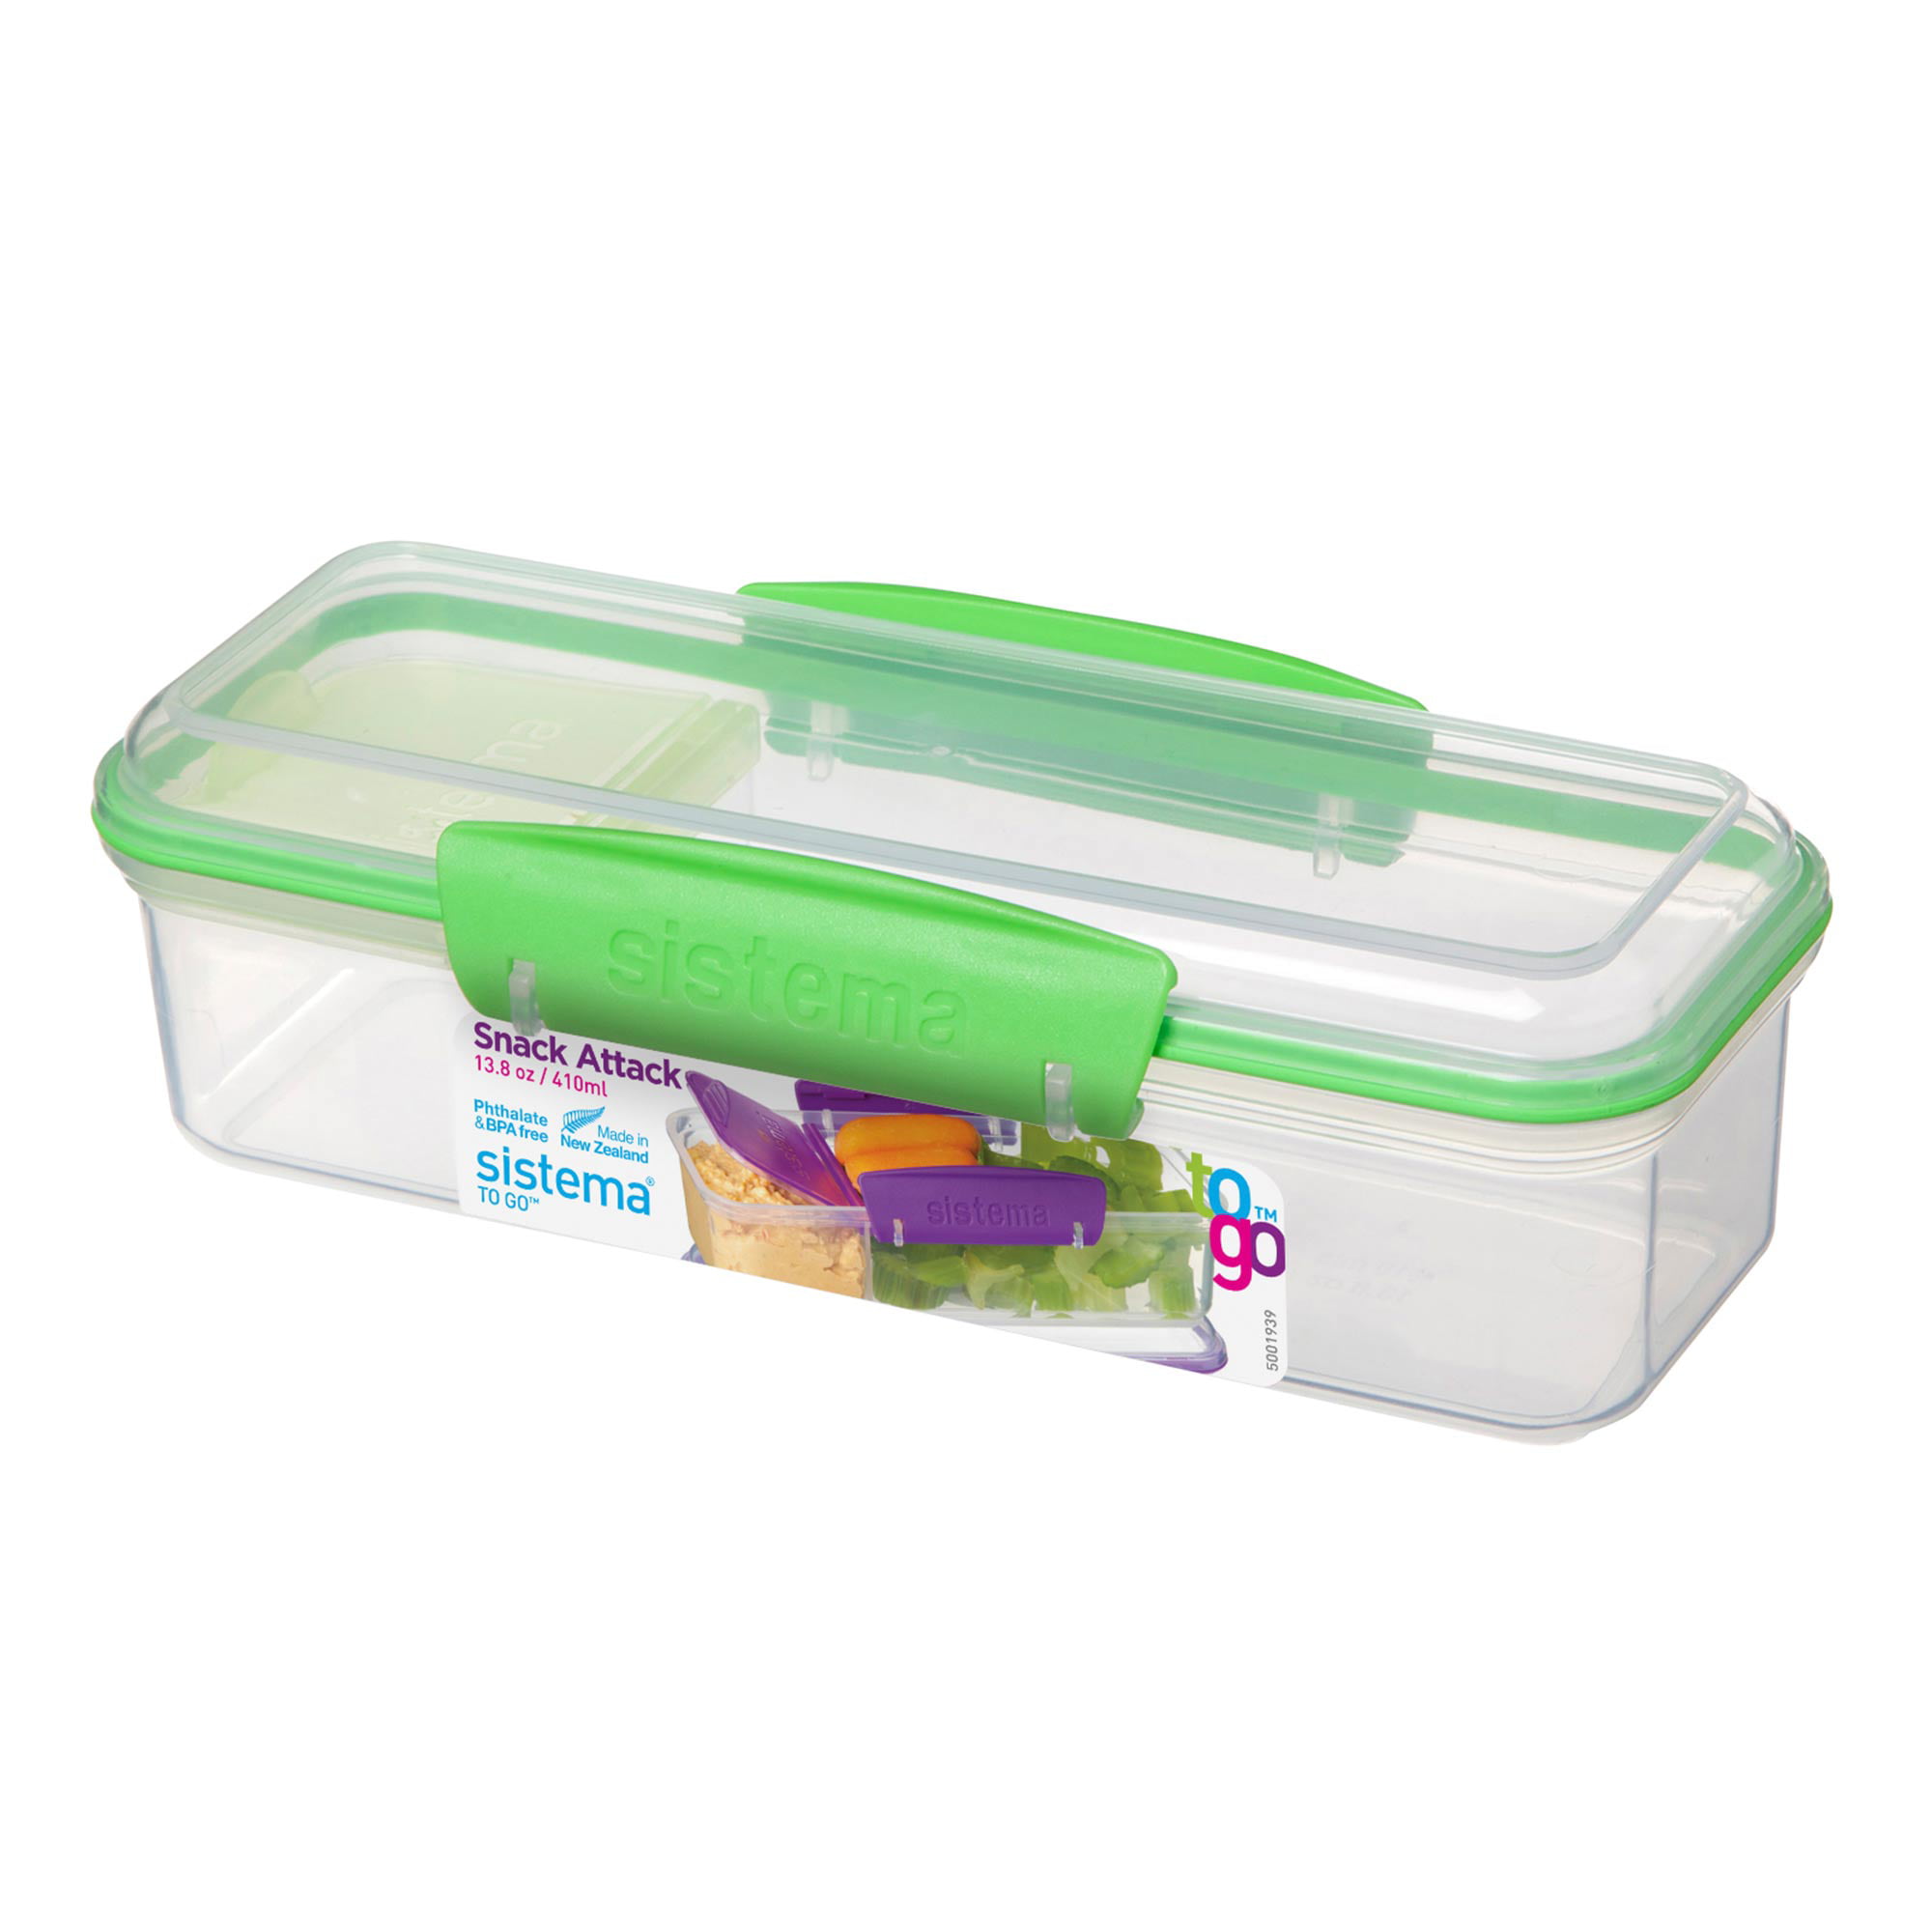 Celery & Dip To-Go — Snack Container Bento Box